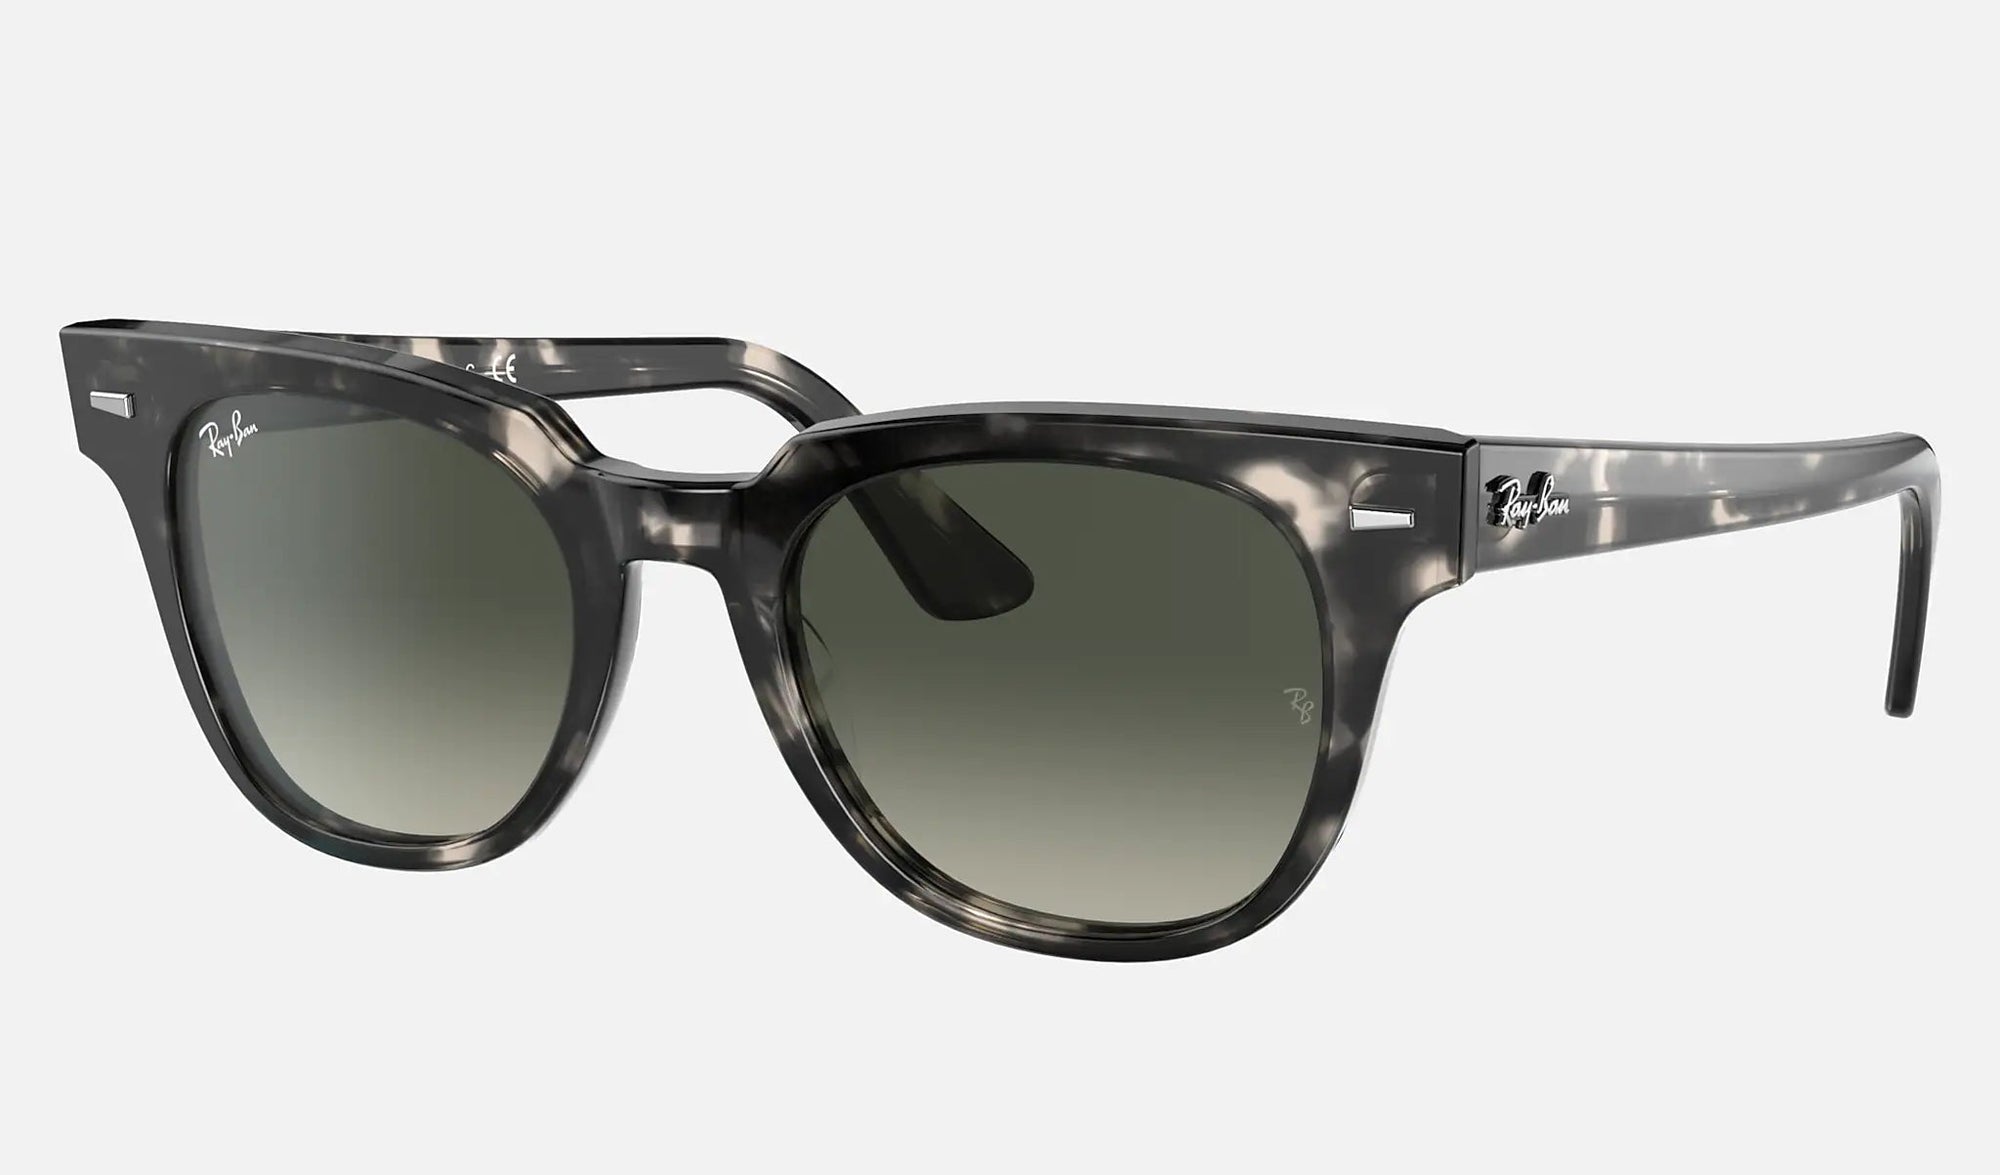 RAY-BAN Meteor Fleck Grey Havana - Grey Gradient Sunglasses Sunglasses Ray-Ban 